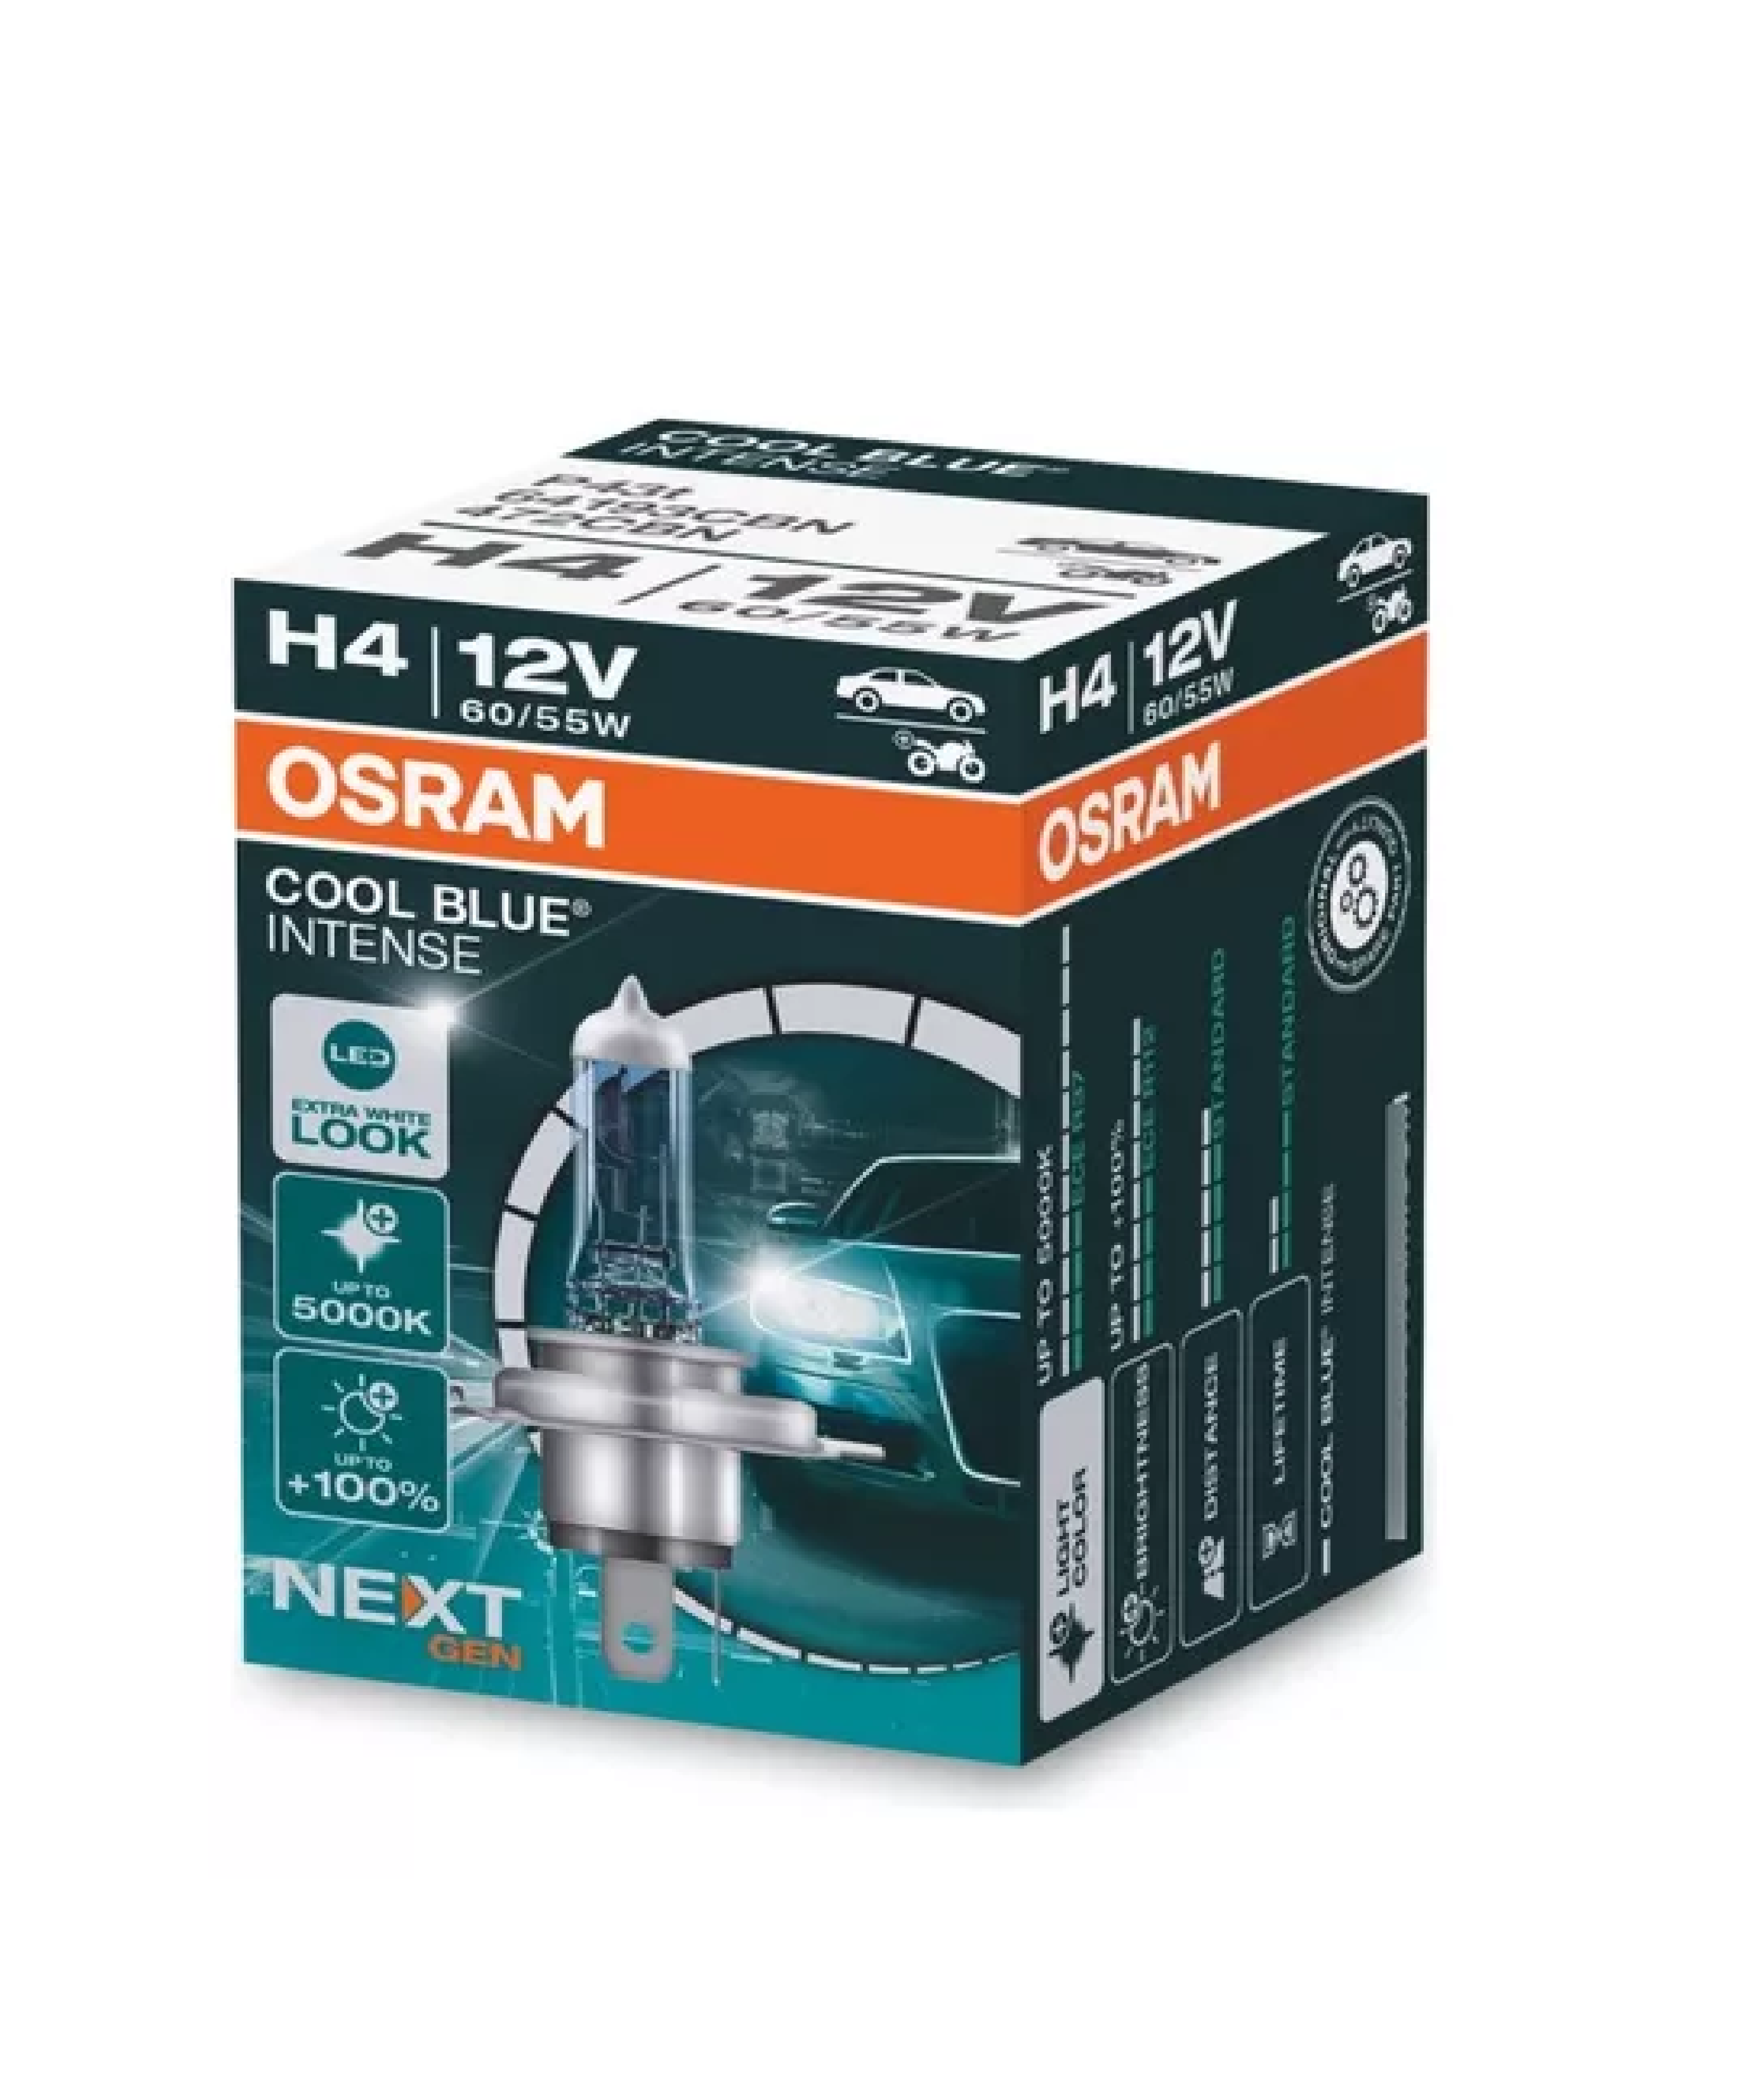 LAMPARA H4 OSRAM 12V 60/55W COOL BLUE INTENSE » Gomatodo